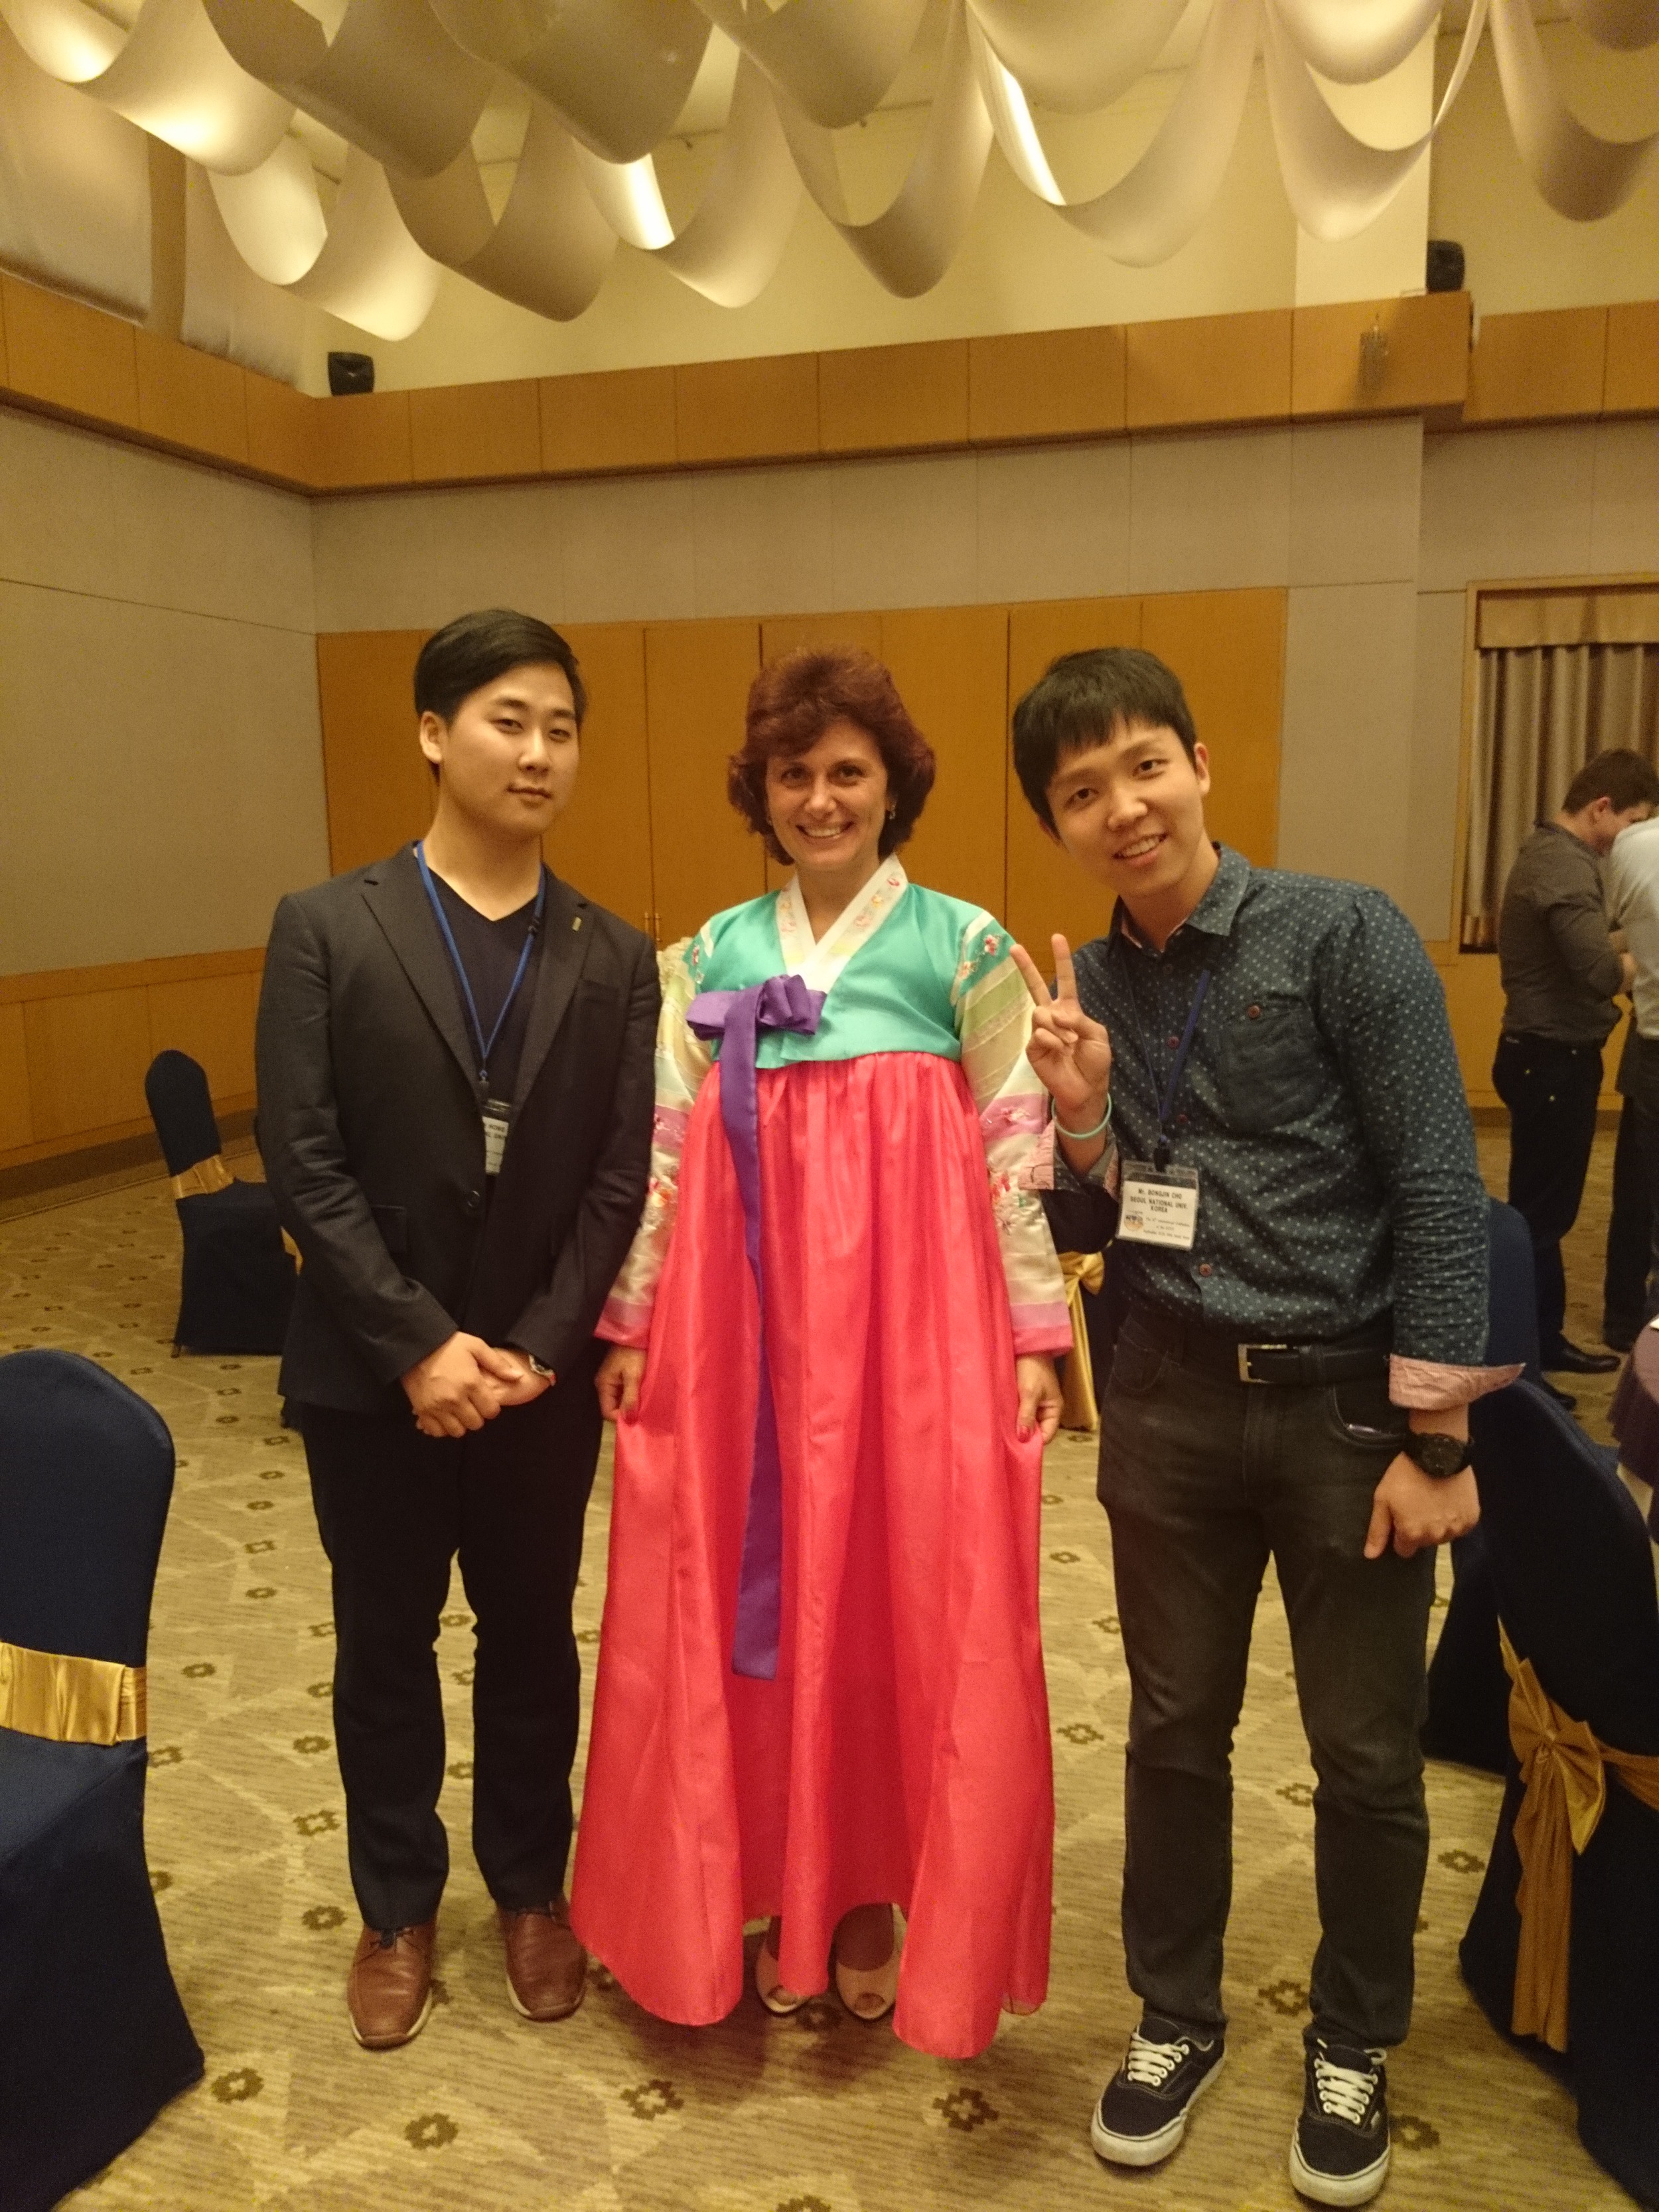 istvs_seoul2014-kim_Dr. Sandu in Korean traditional costume.jpg